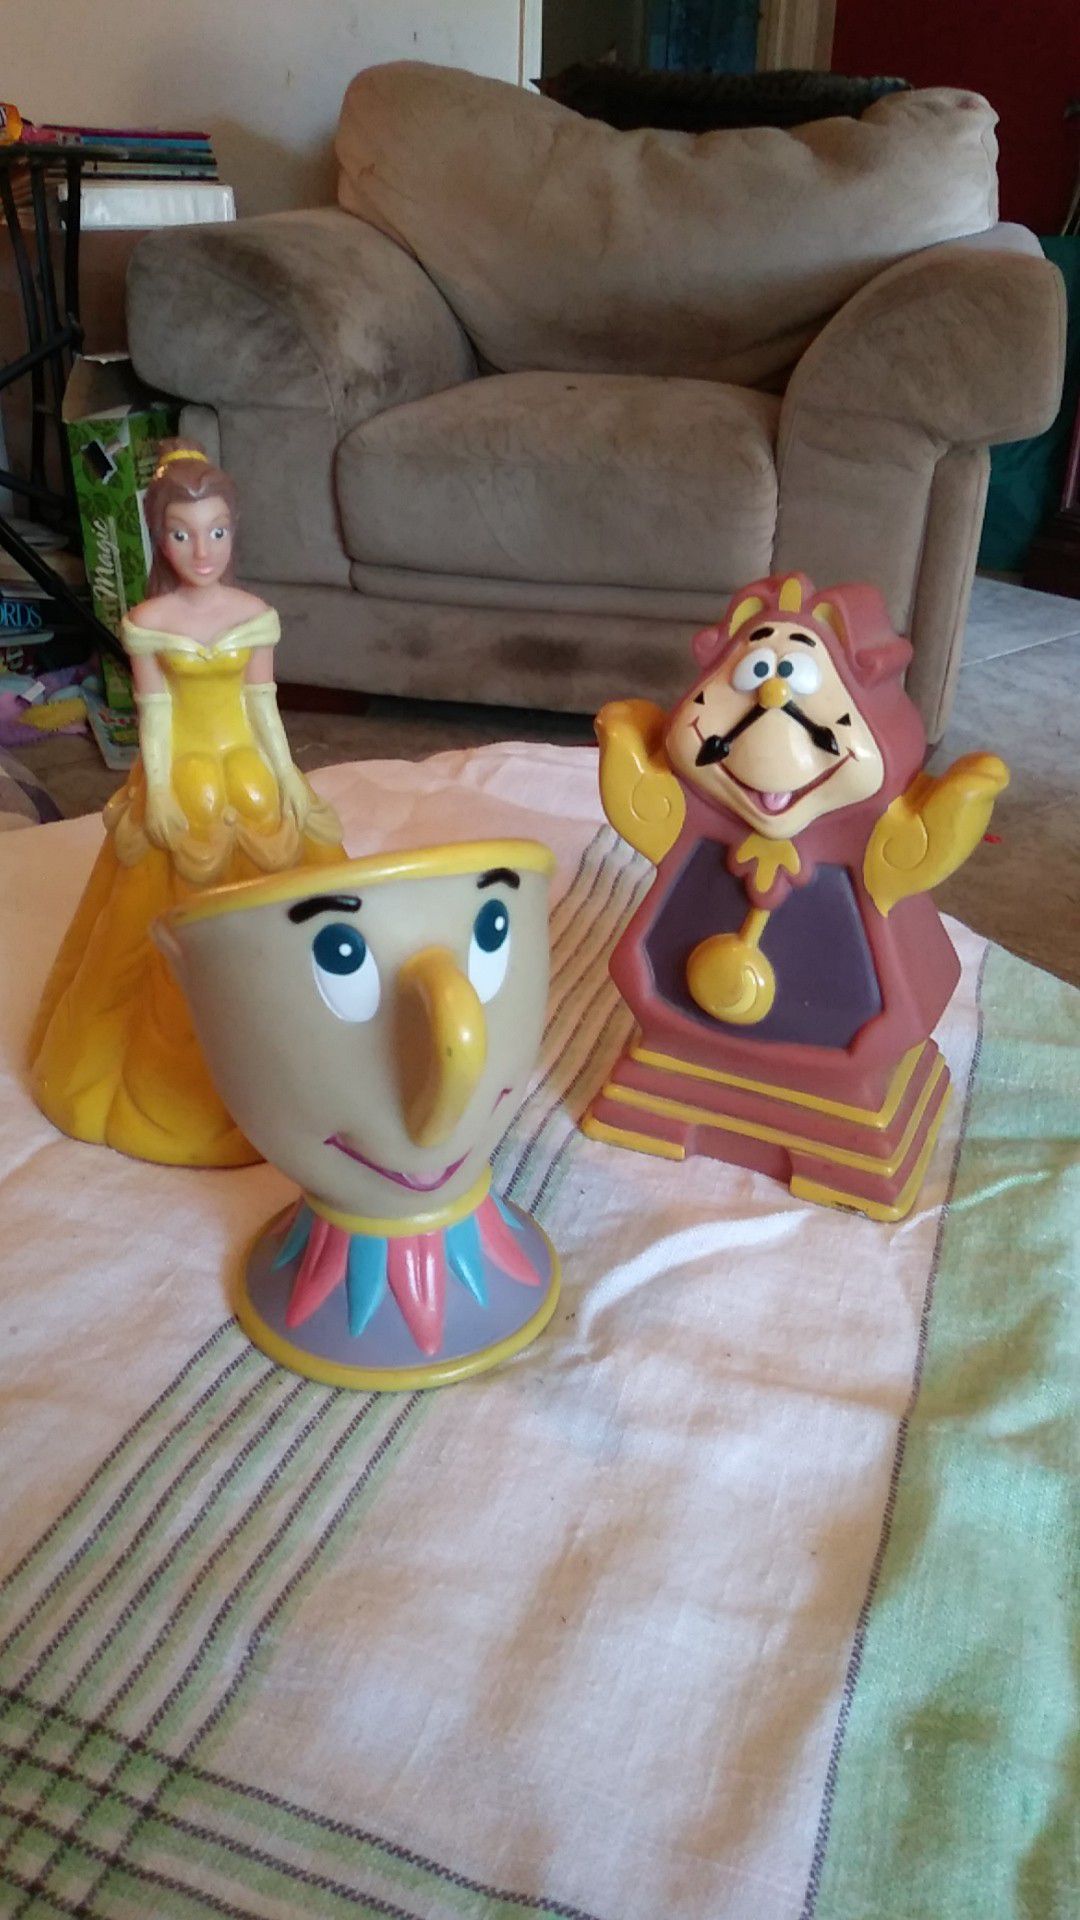 Disney's Beauty & The Beast Plastic Toys